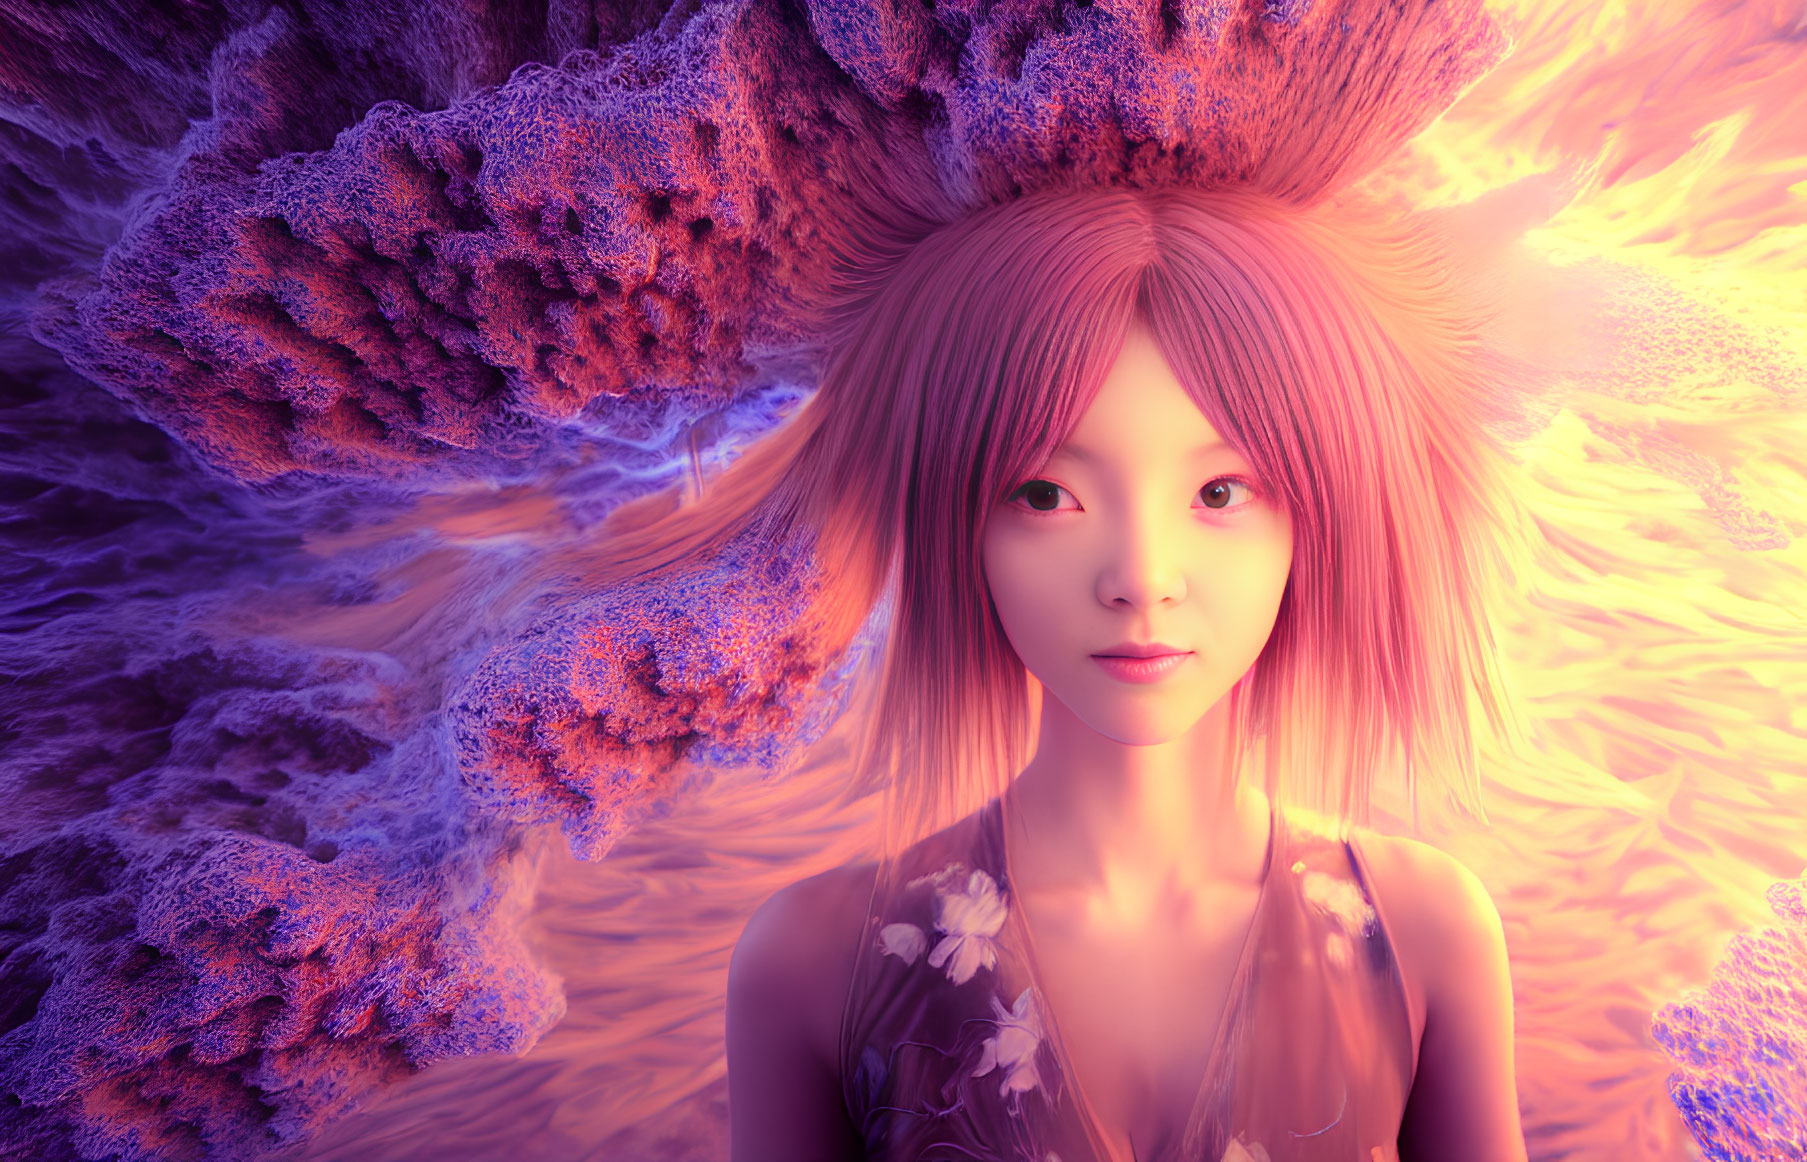 Vibrant digital artwork: Female figure with pink hair on purple and orange fractal backdrop